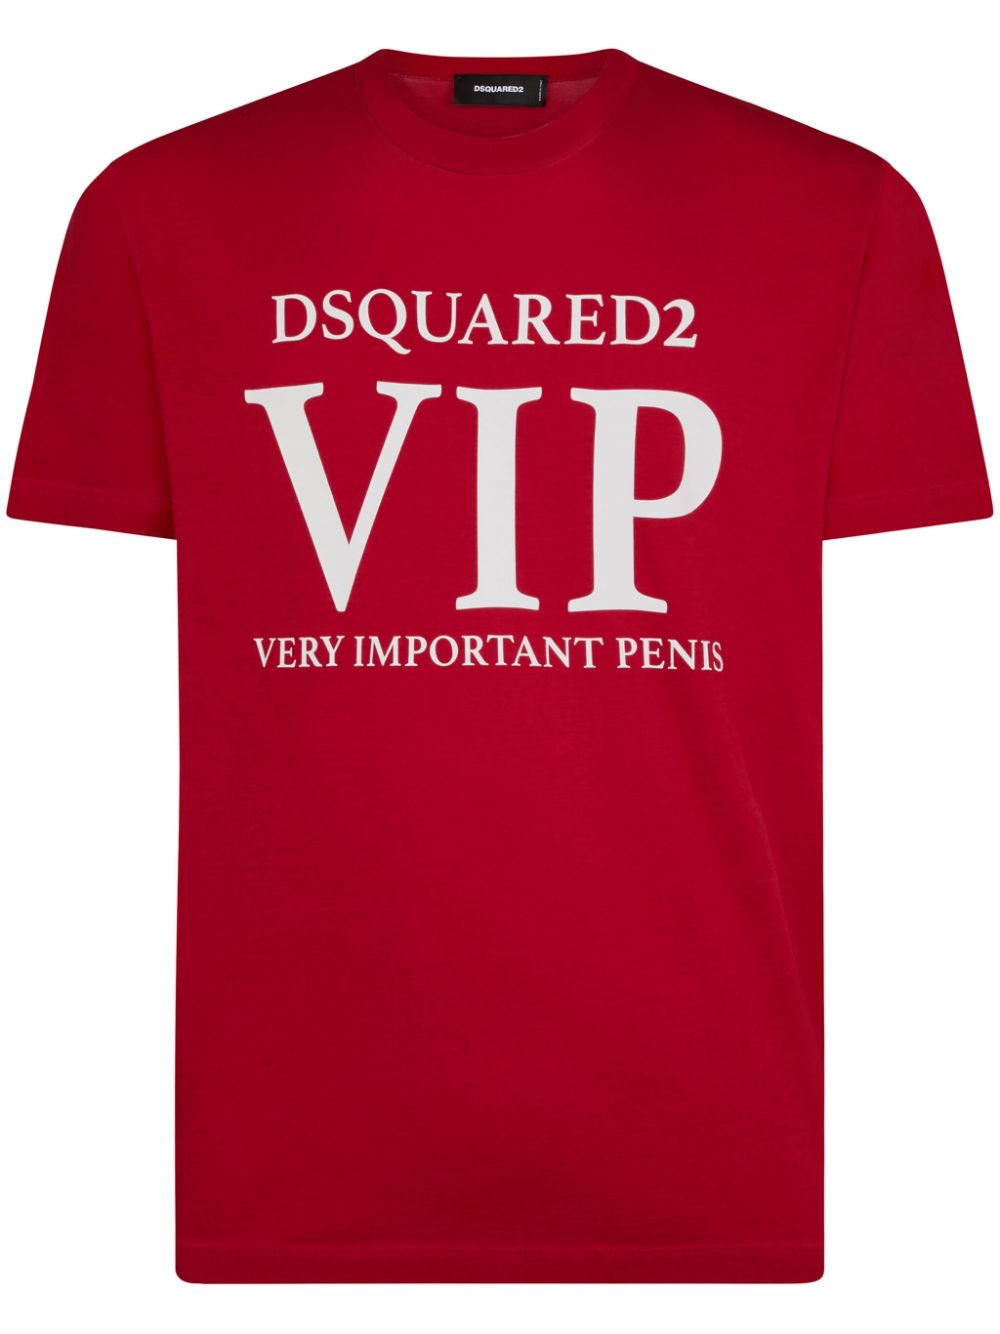 Dsquared2 VIP Cool Fit T-shirt von Dsquared2